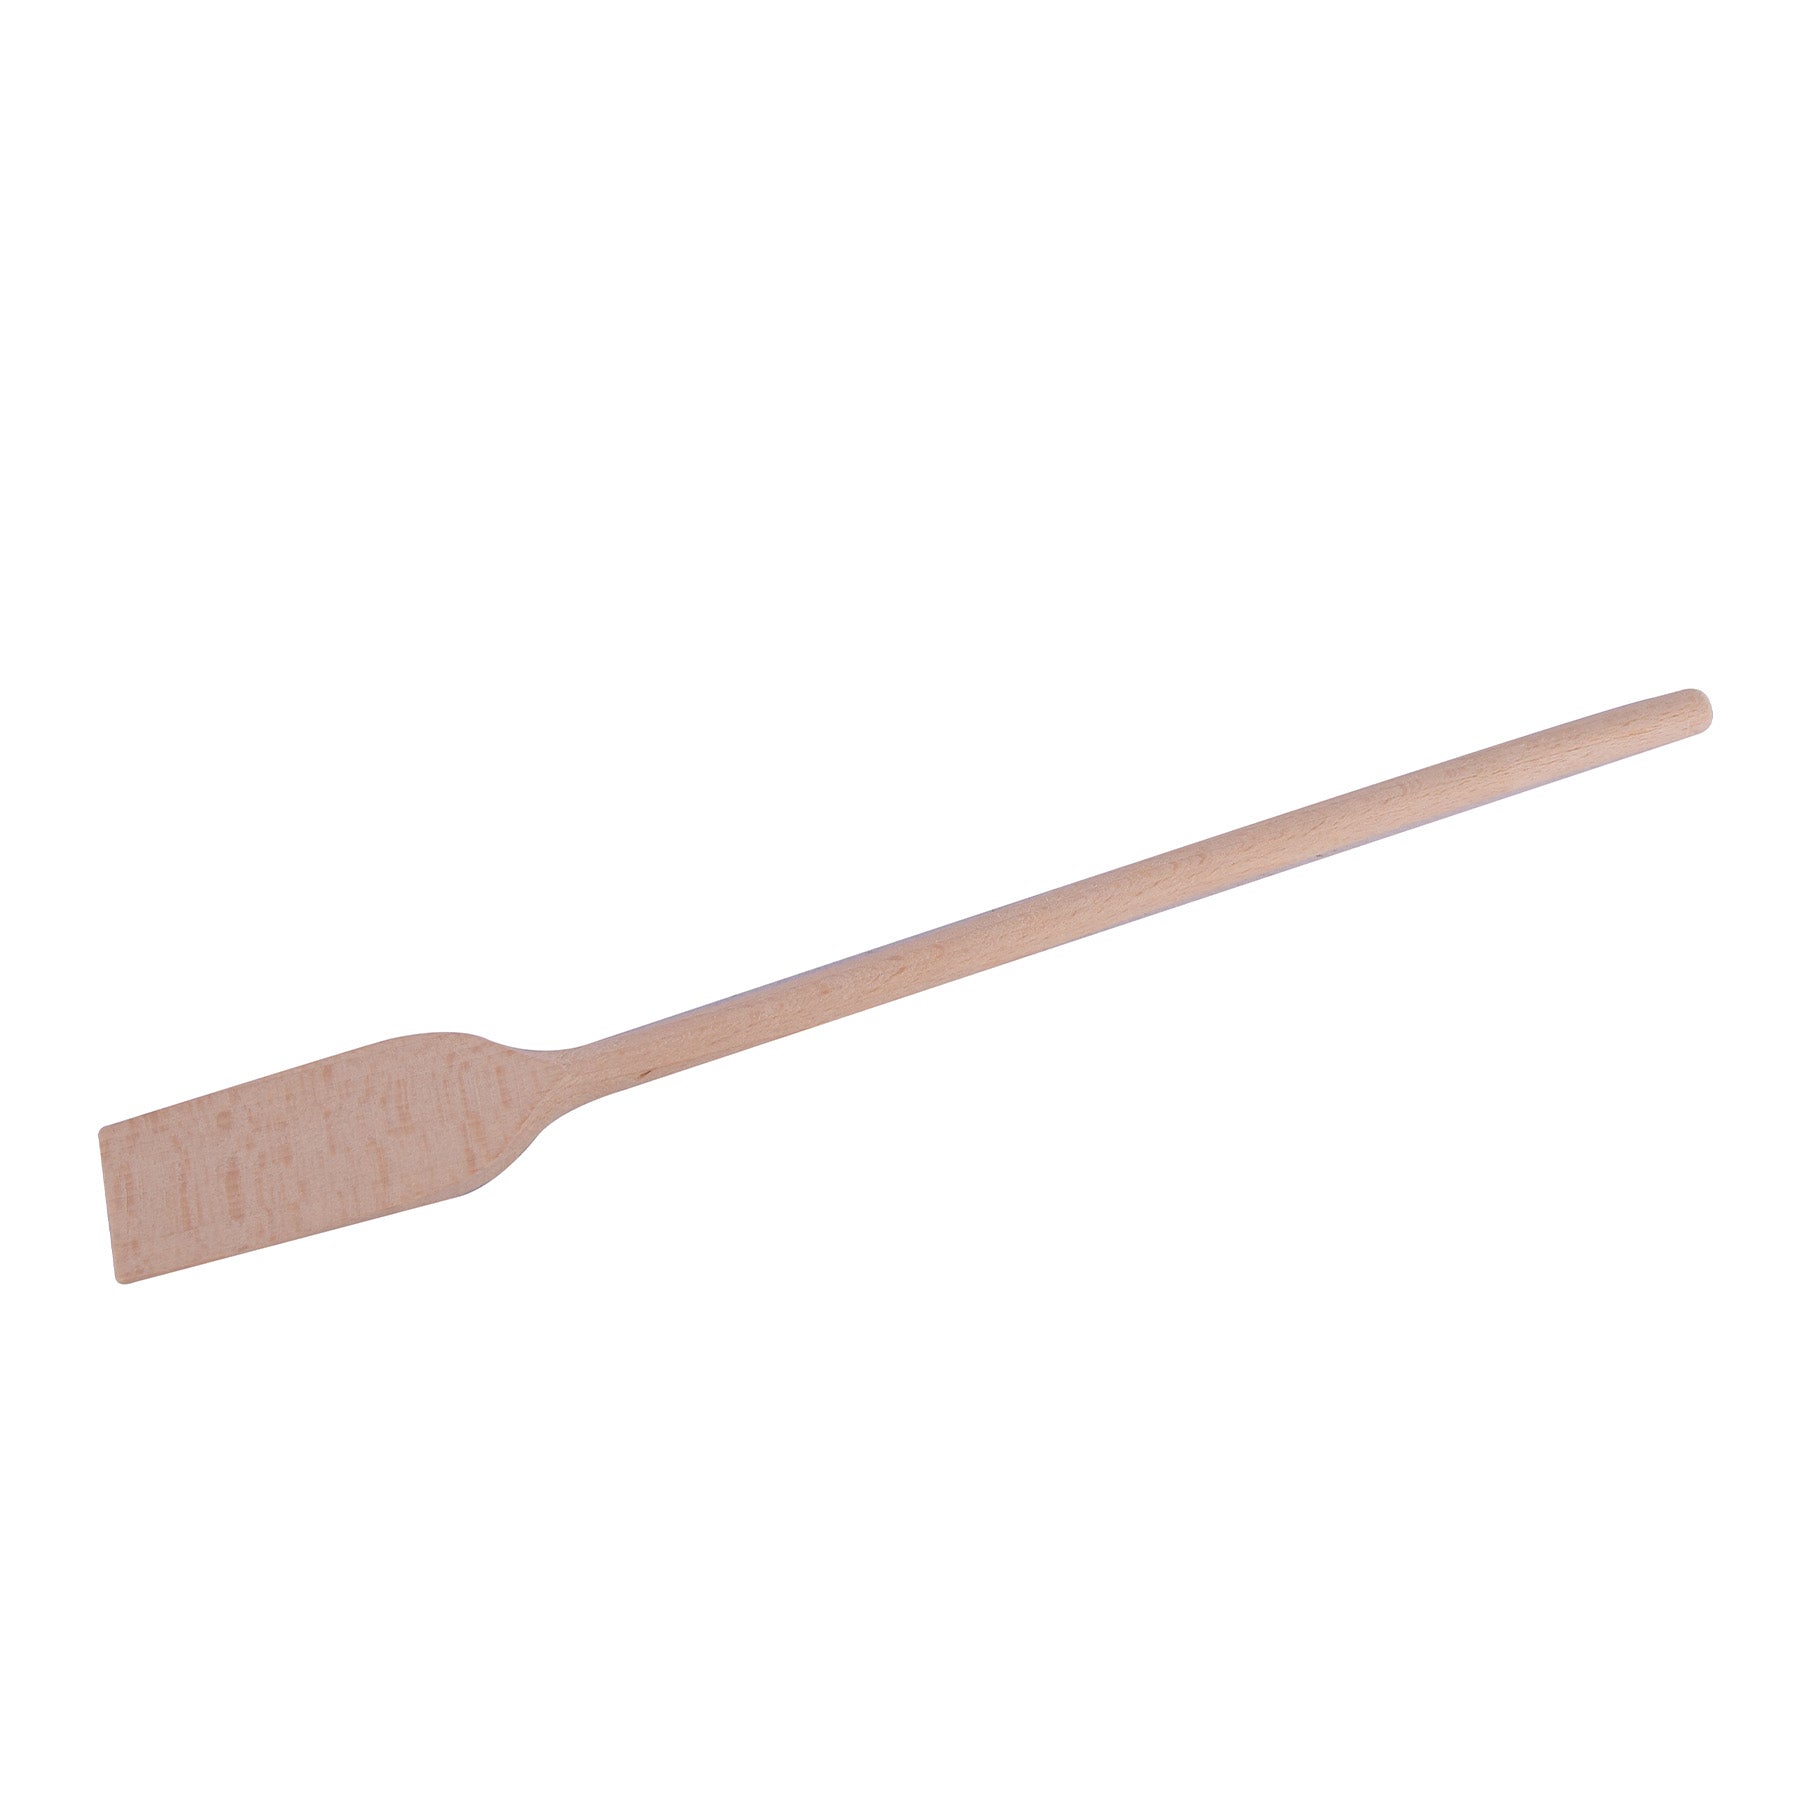 Wooden Narrow spatula, NaturalSize: 35 cm